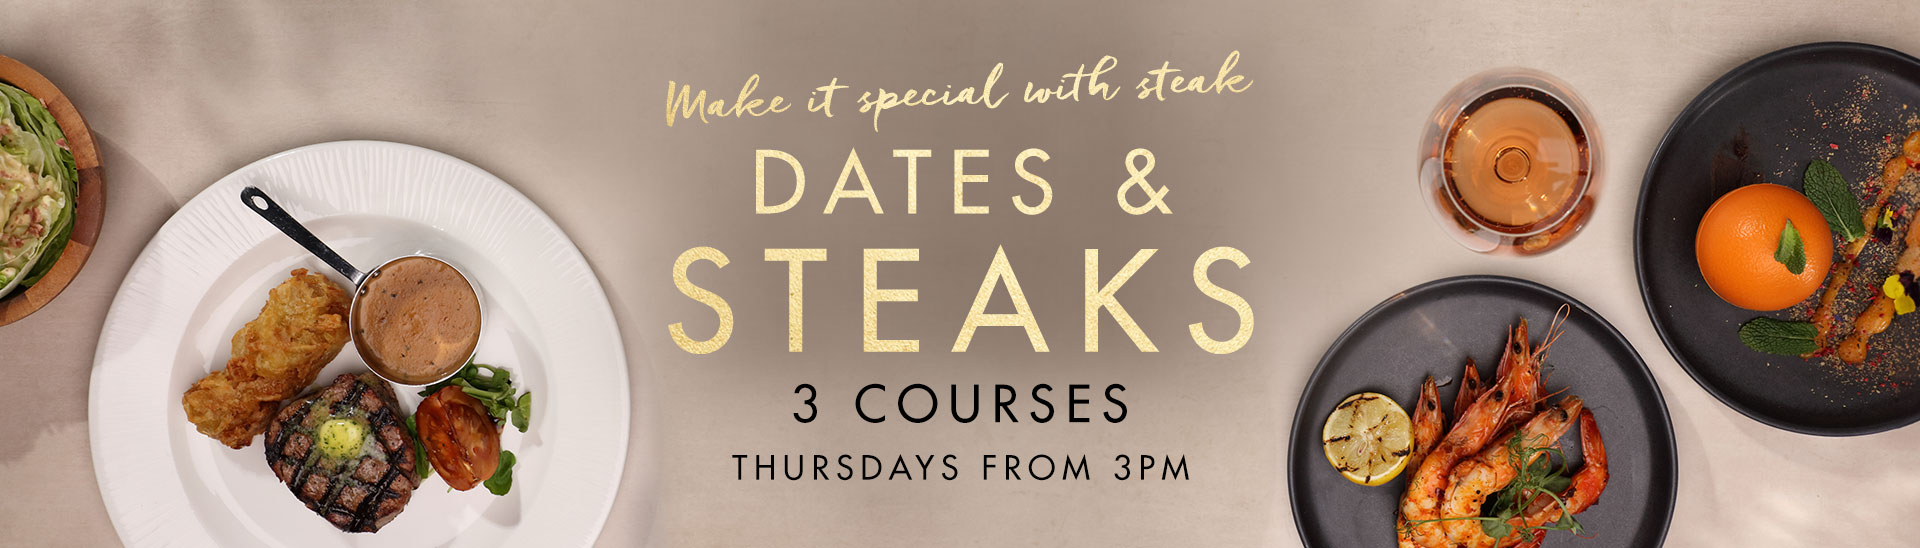 Dates & Steaks at Miller & Carter Birmingham Hagley Road